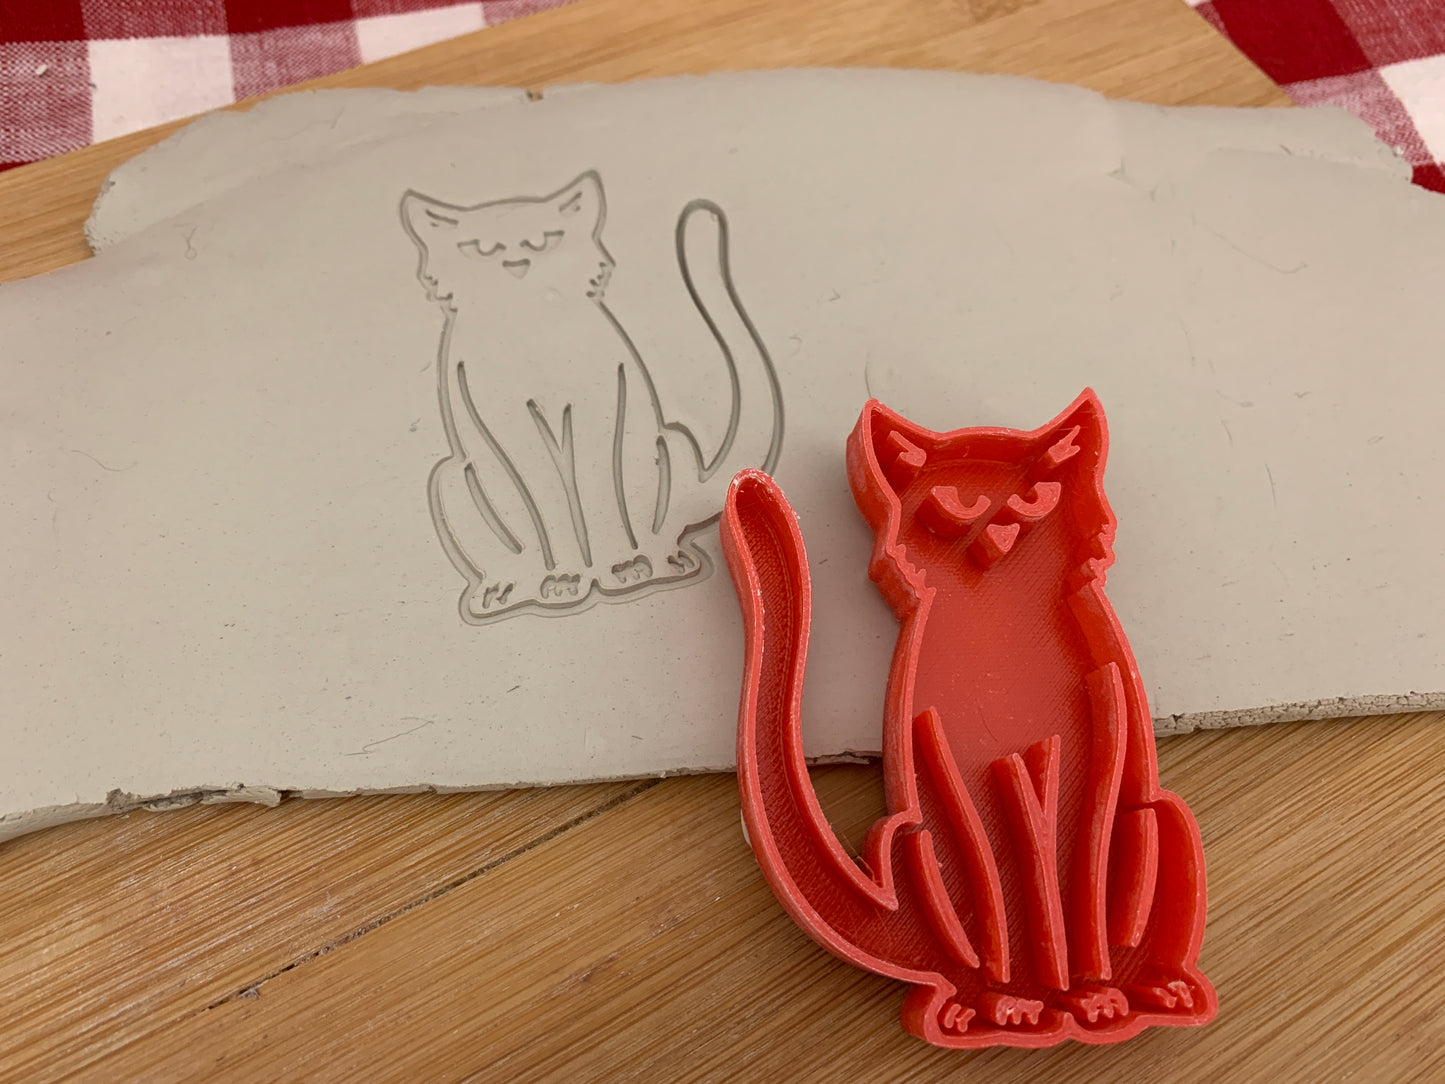 Pottery Stamp, Halloween Black Cat design - multiple sizes